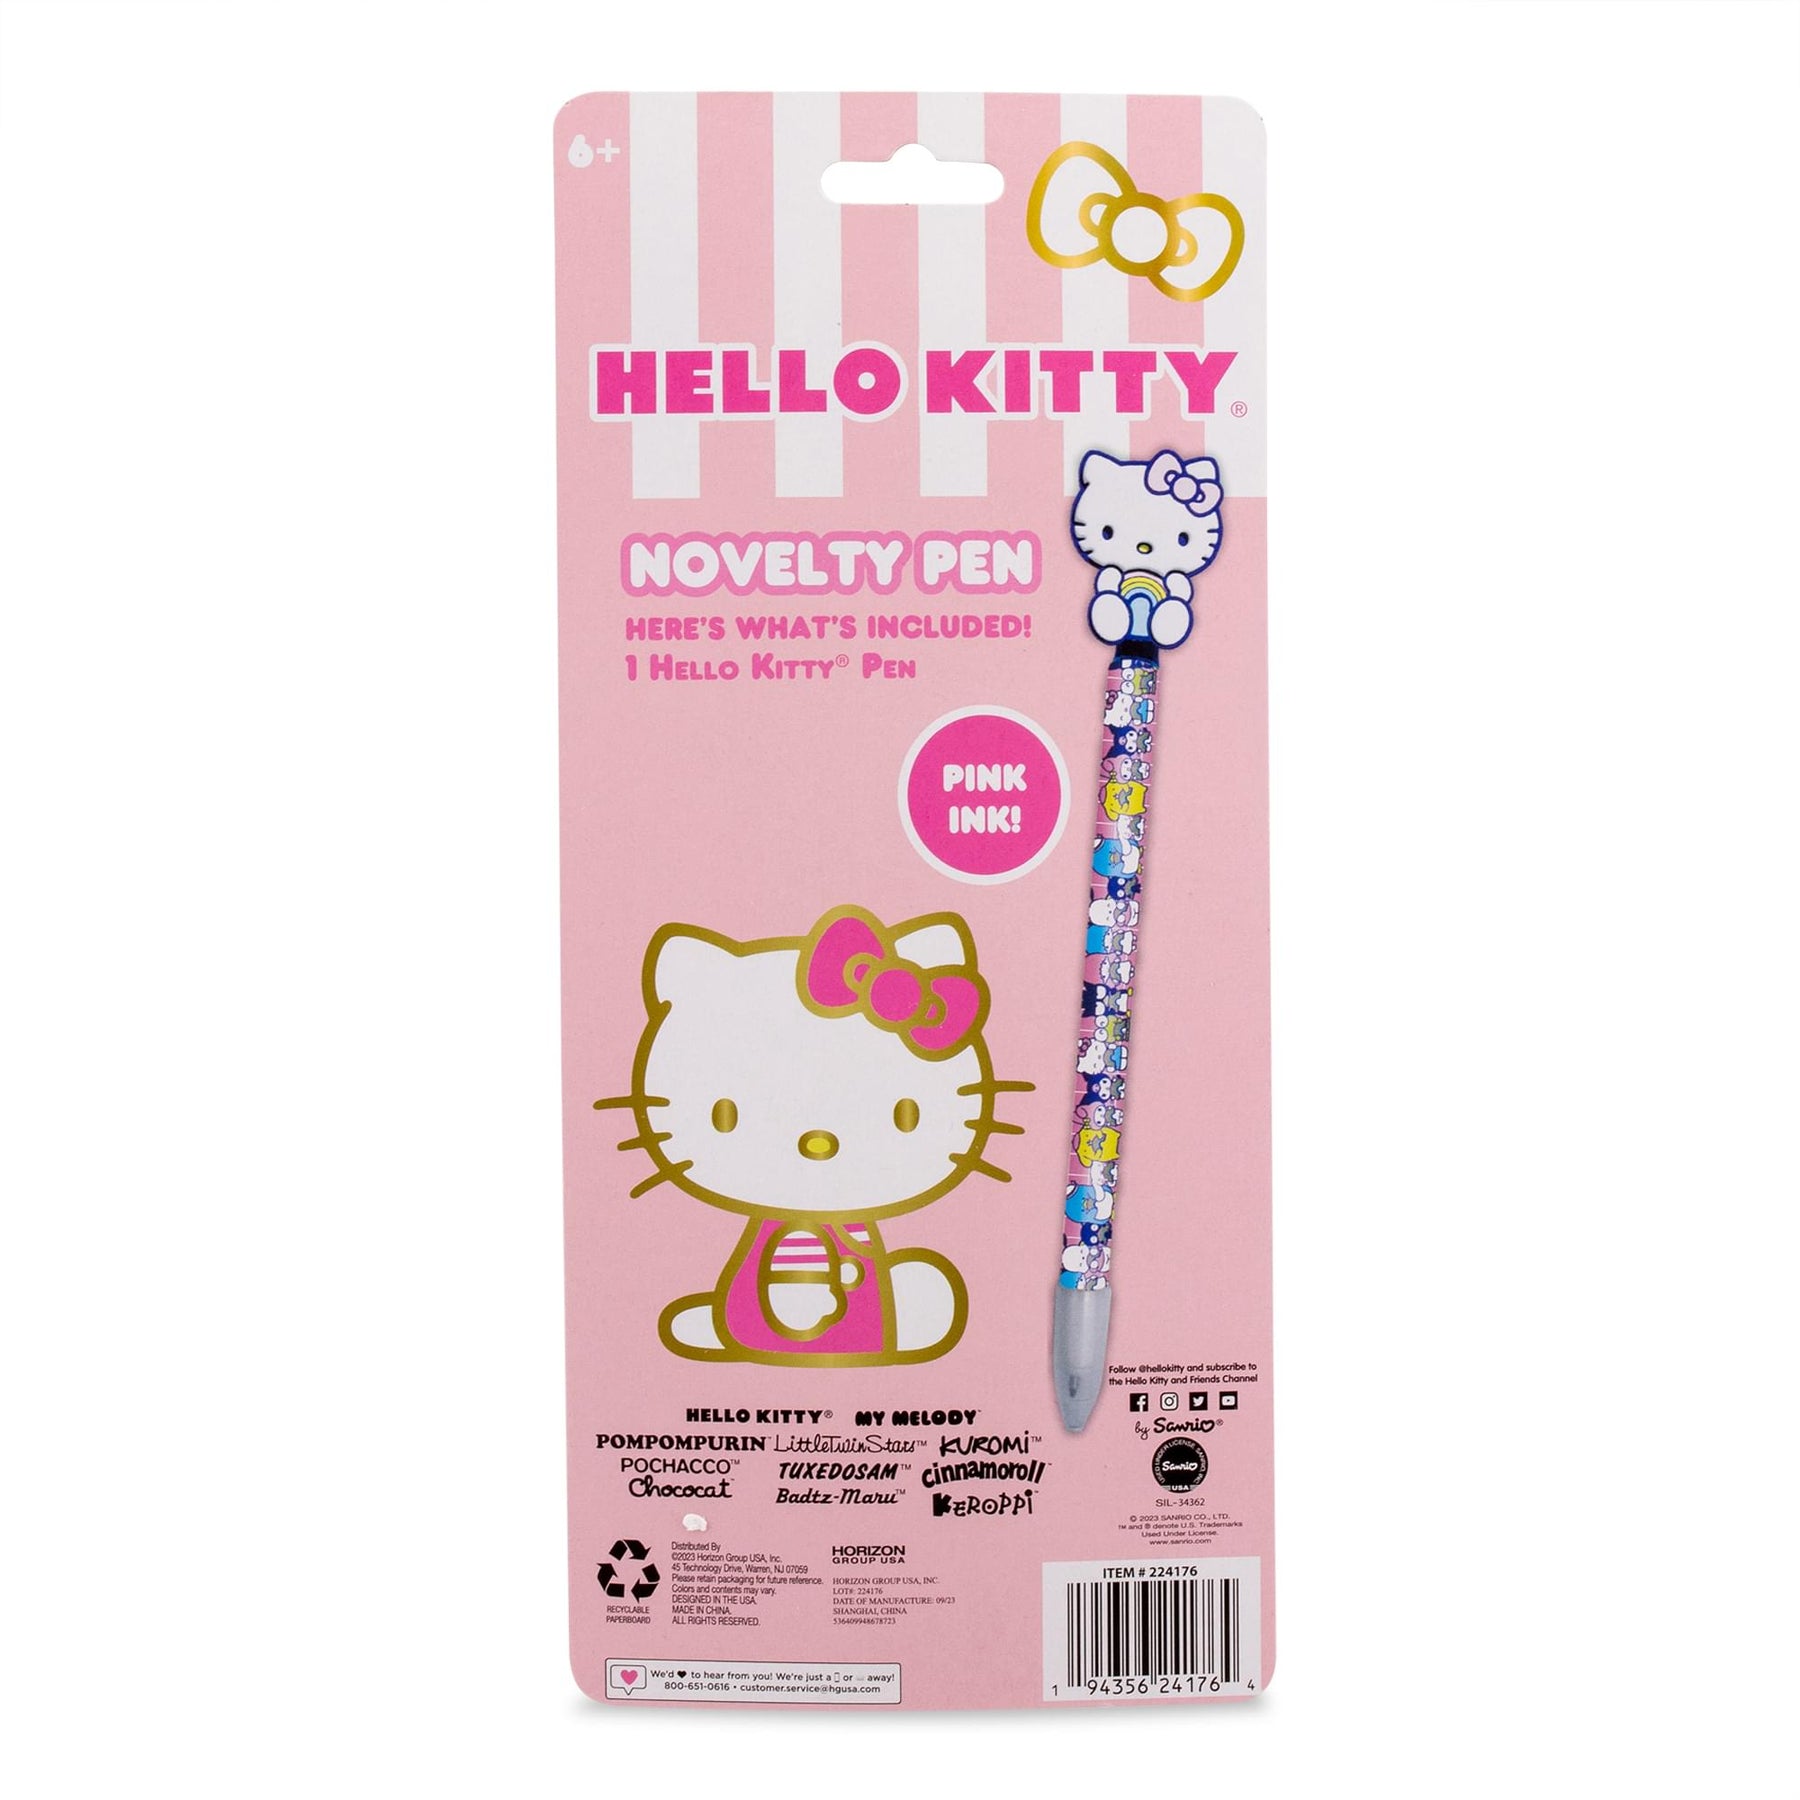 Sanrio Hello Kitty and Friends Novelty Pen